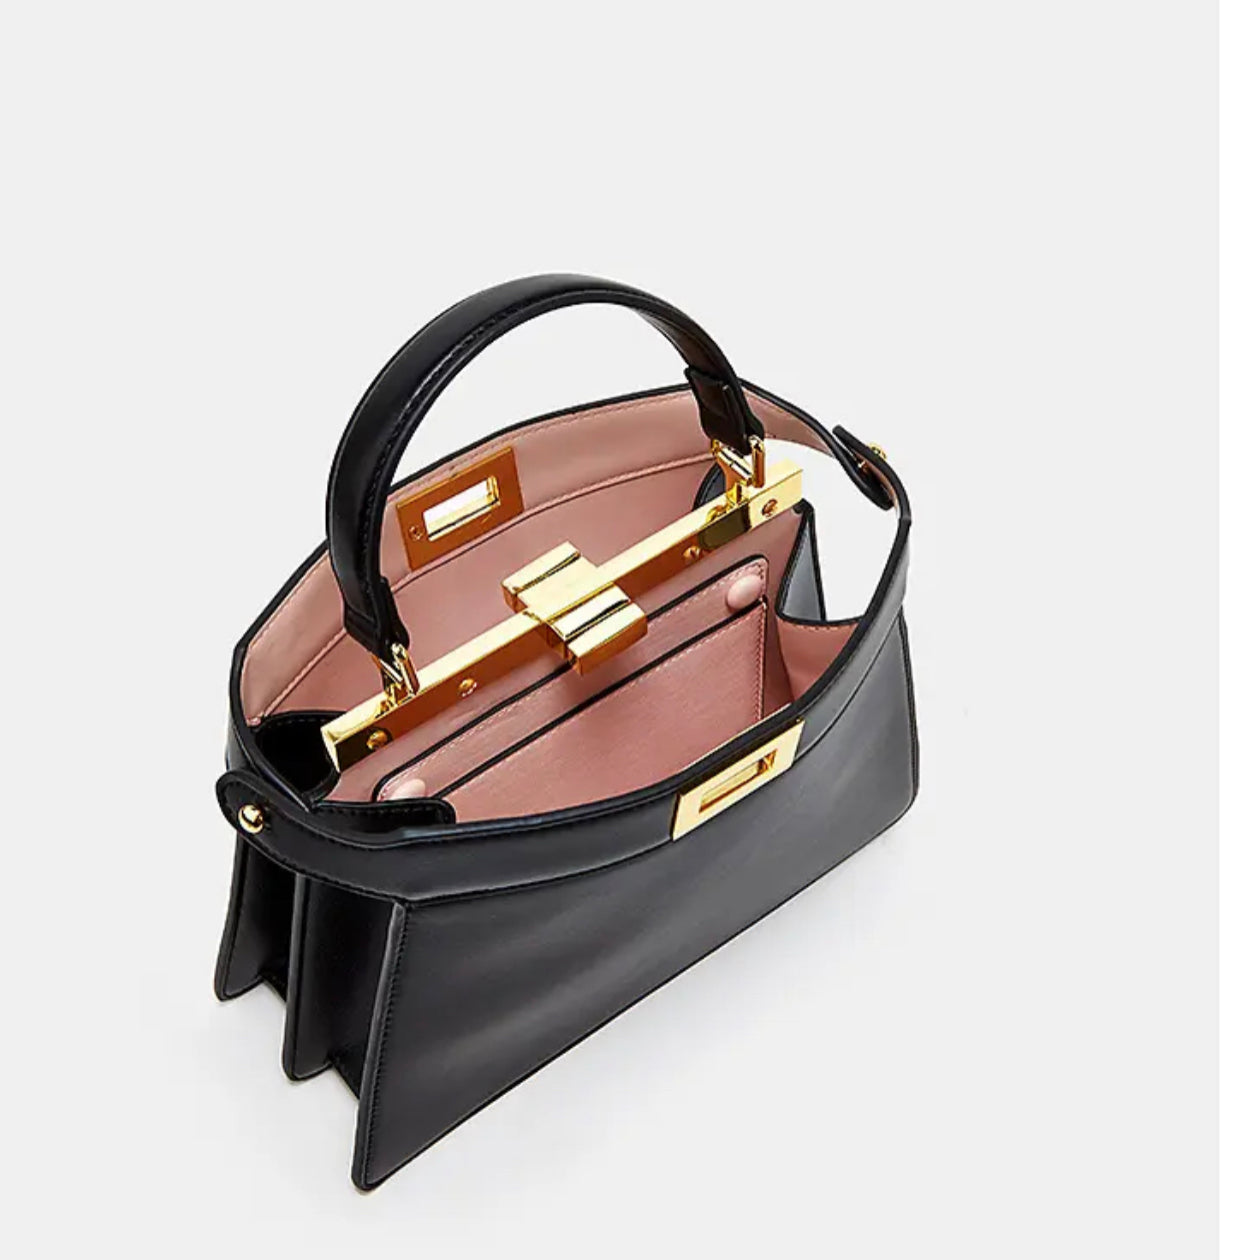 fashion Handbags for Women Top Handle Satchel Shoulder Bag Tote Bag luxury bag